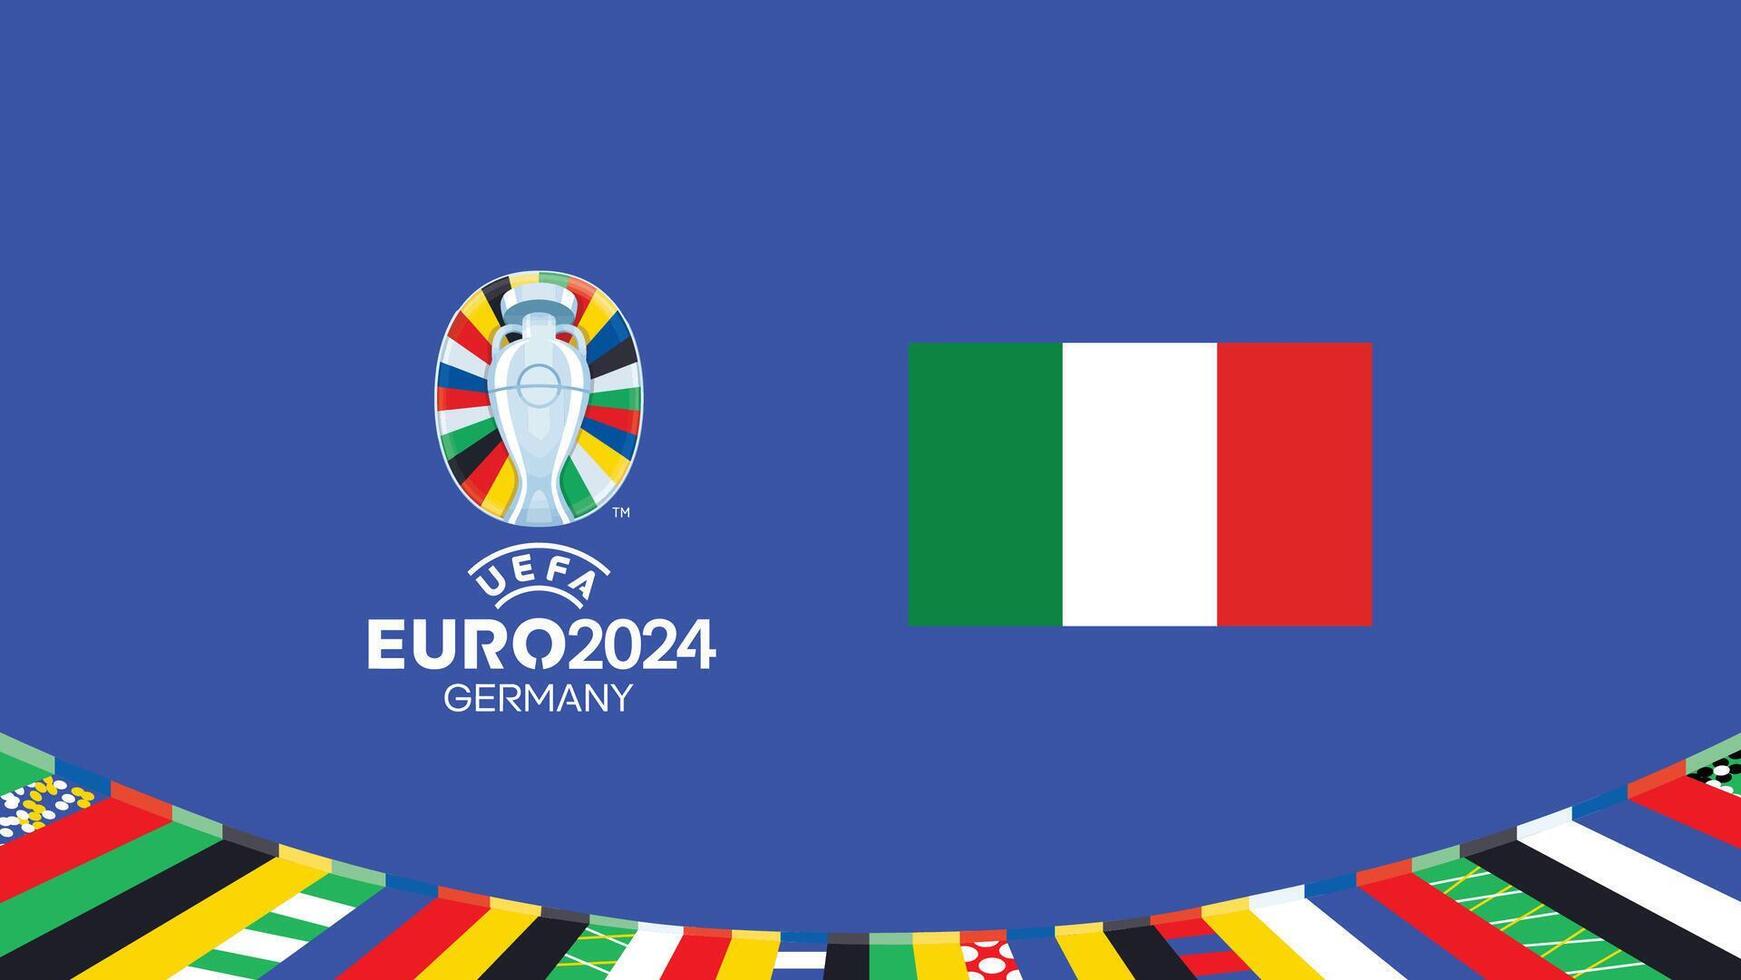 Euro 2024 Italy Emblem Flag Teams Design With Official Symbol Logo Abstract Countries European Football Illustration vector